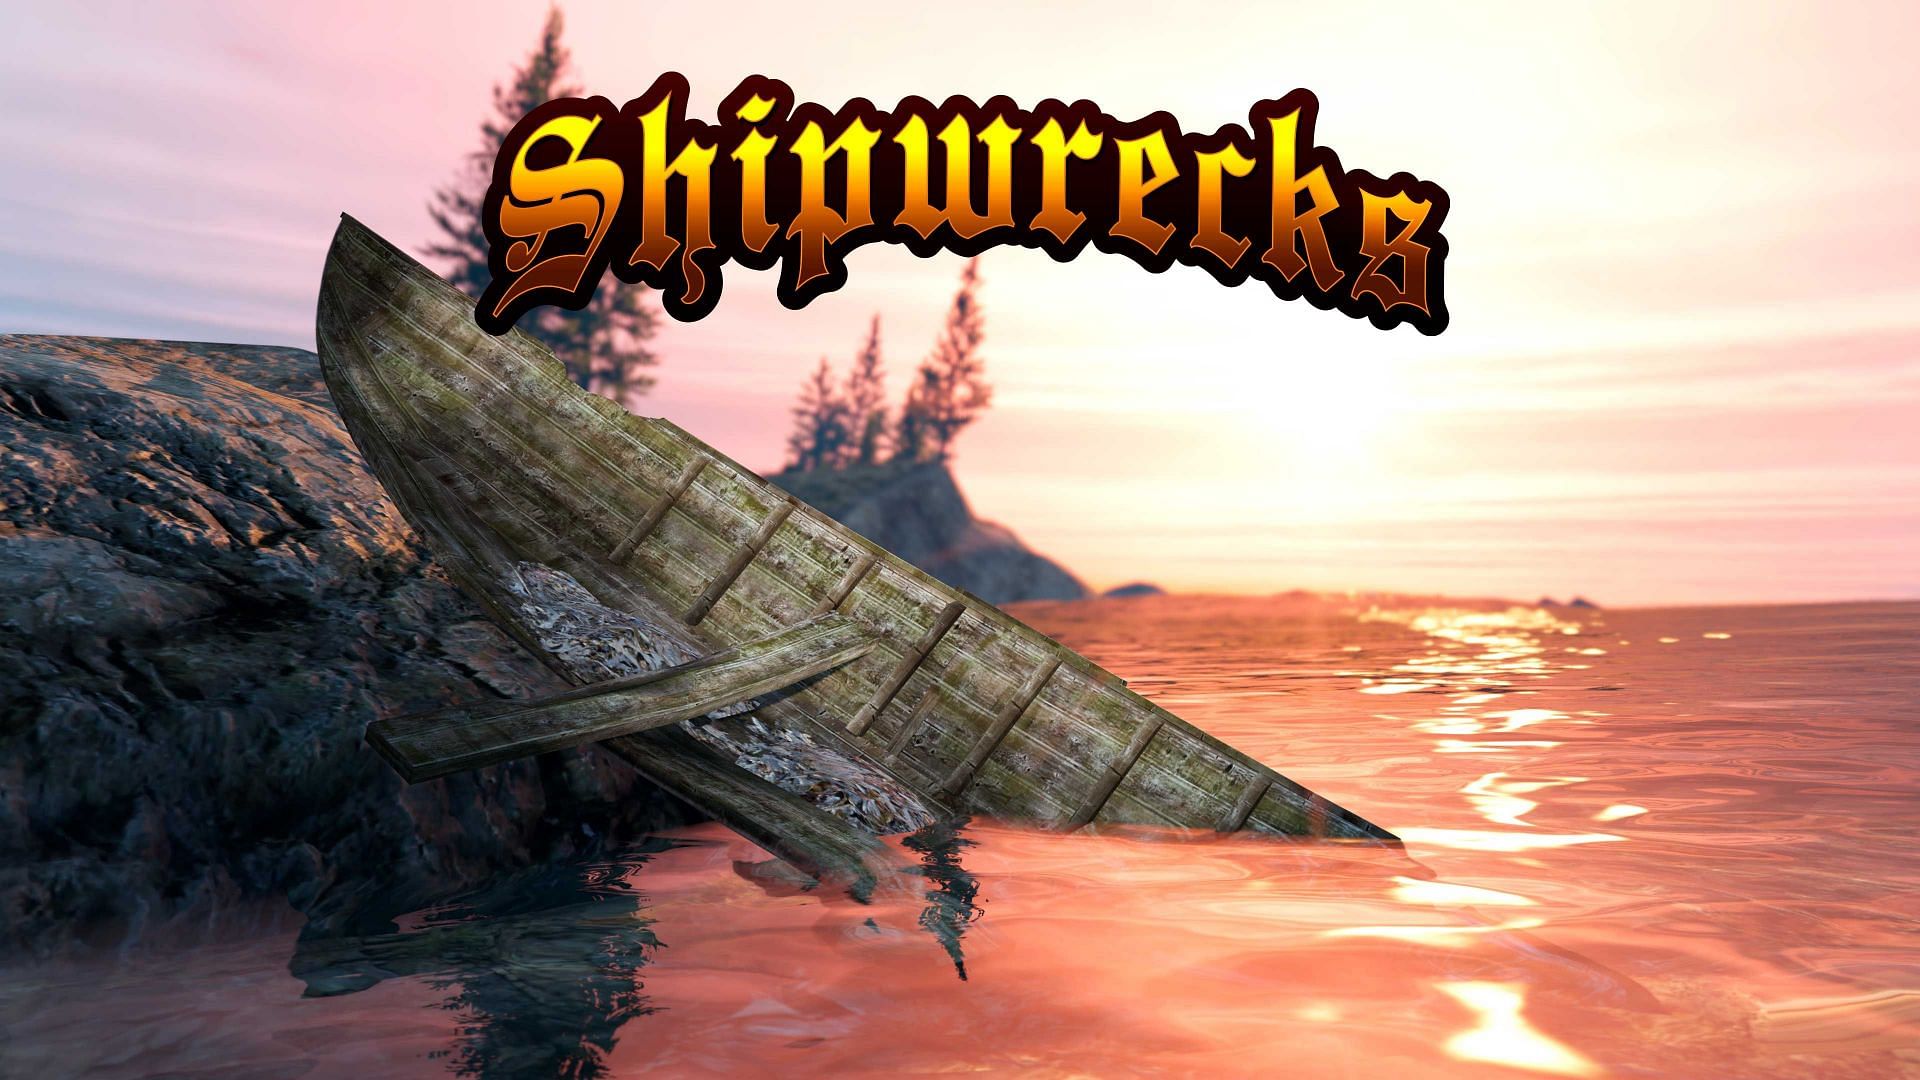 GTA Online Shipwreck location